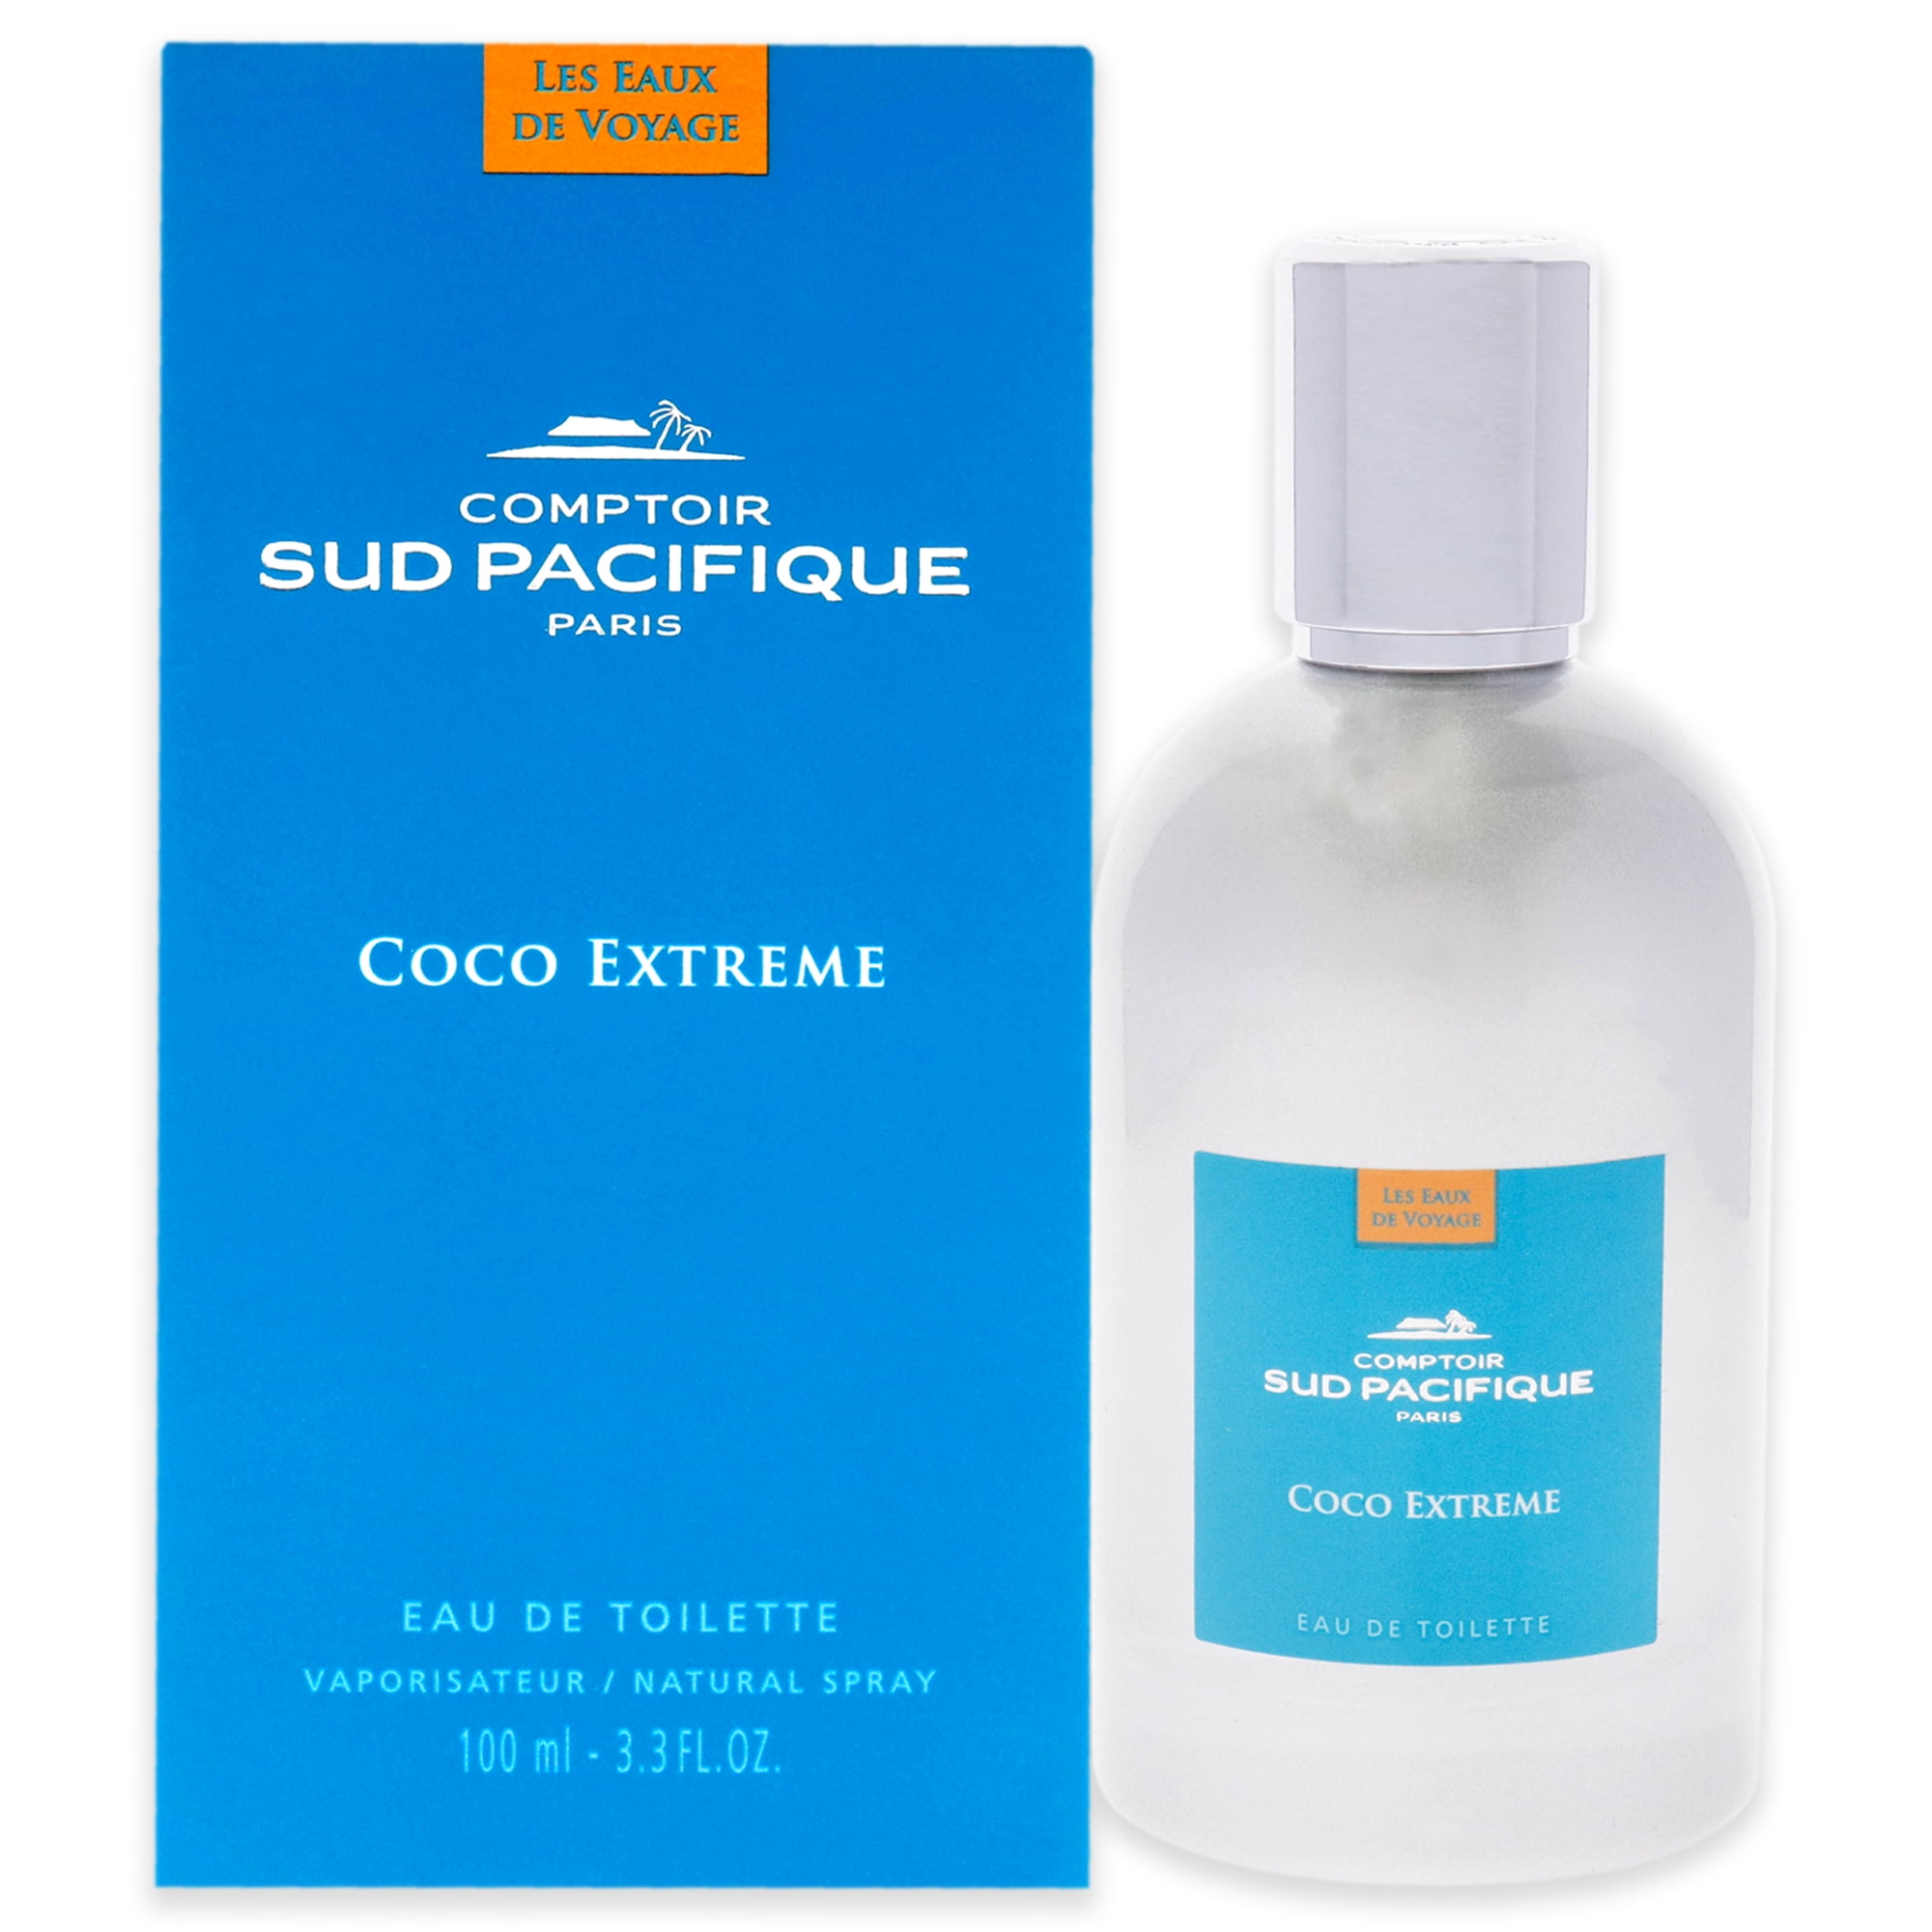 COCO EXTREME by Sud Pacifique 5ml Travel Spray SUGAR ALMOND